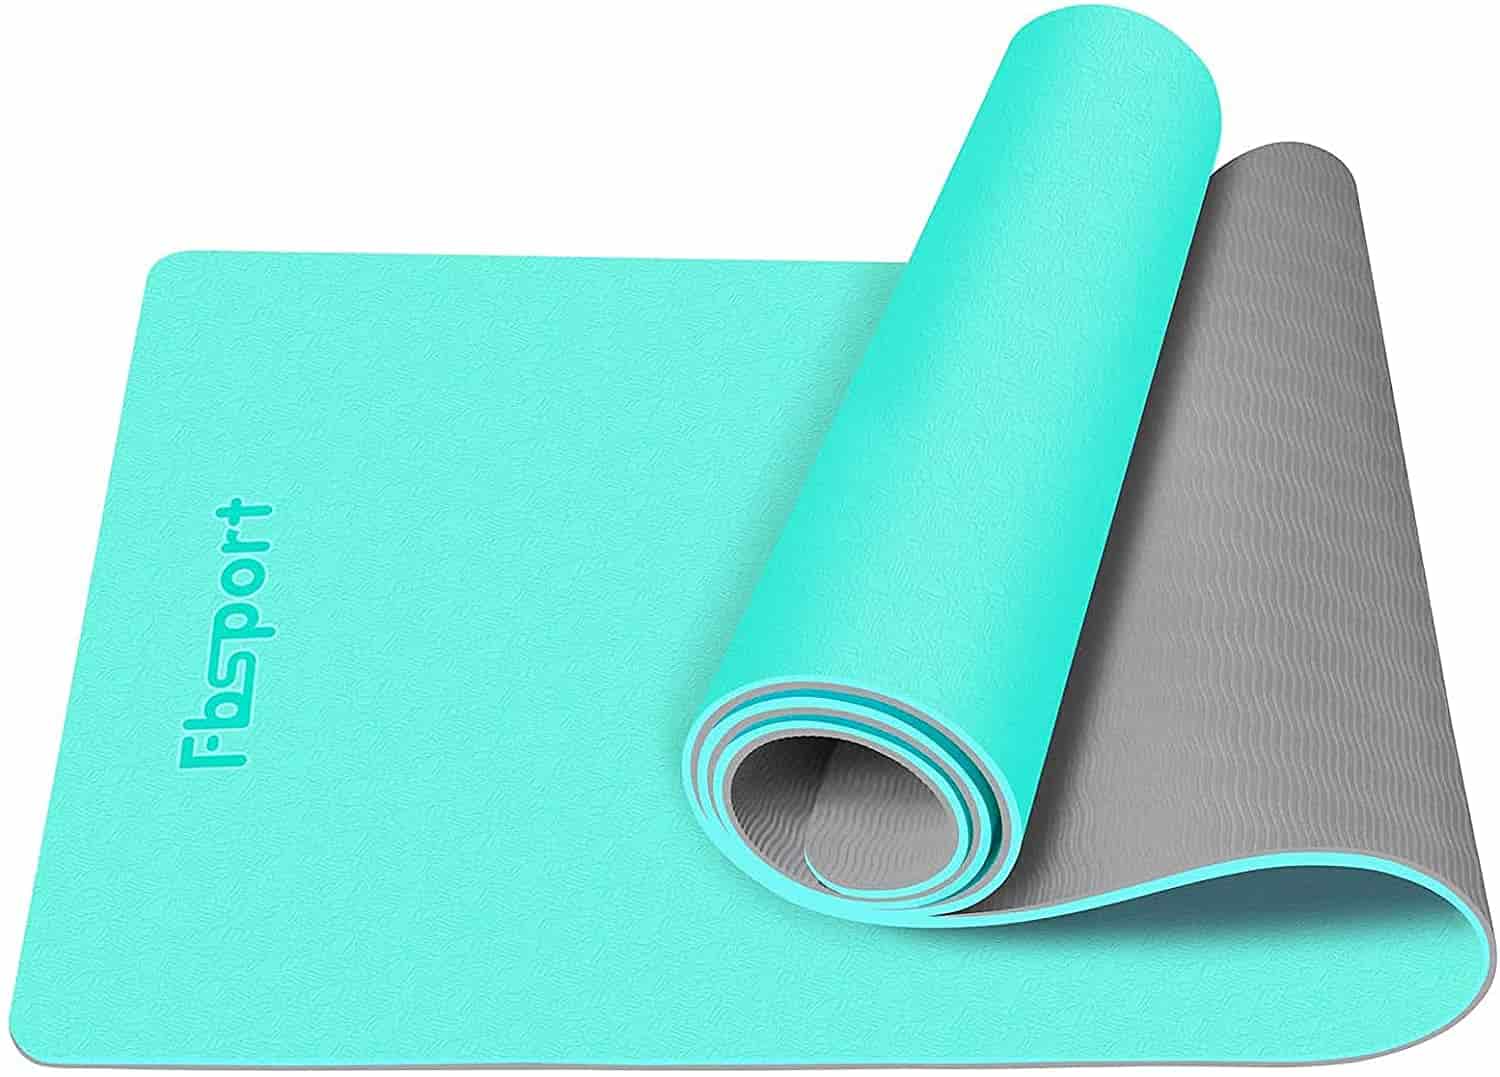 FBSPORT Yoga Mat- Eco-Friendly Non-Slip Fitness Exercise Mat